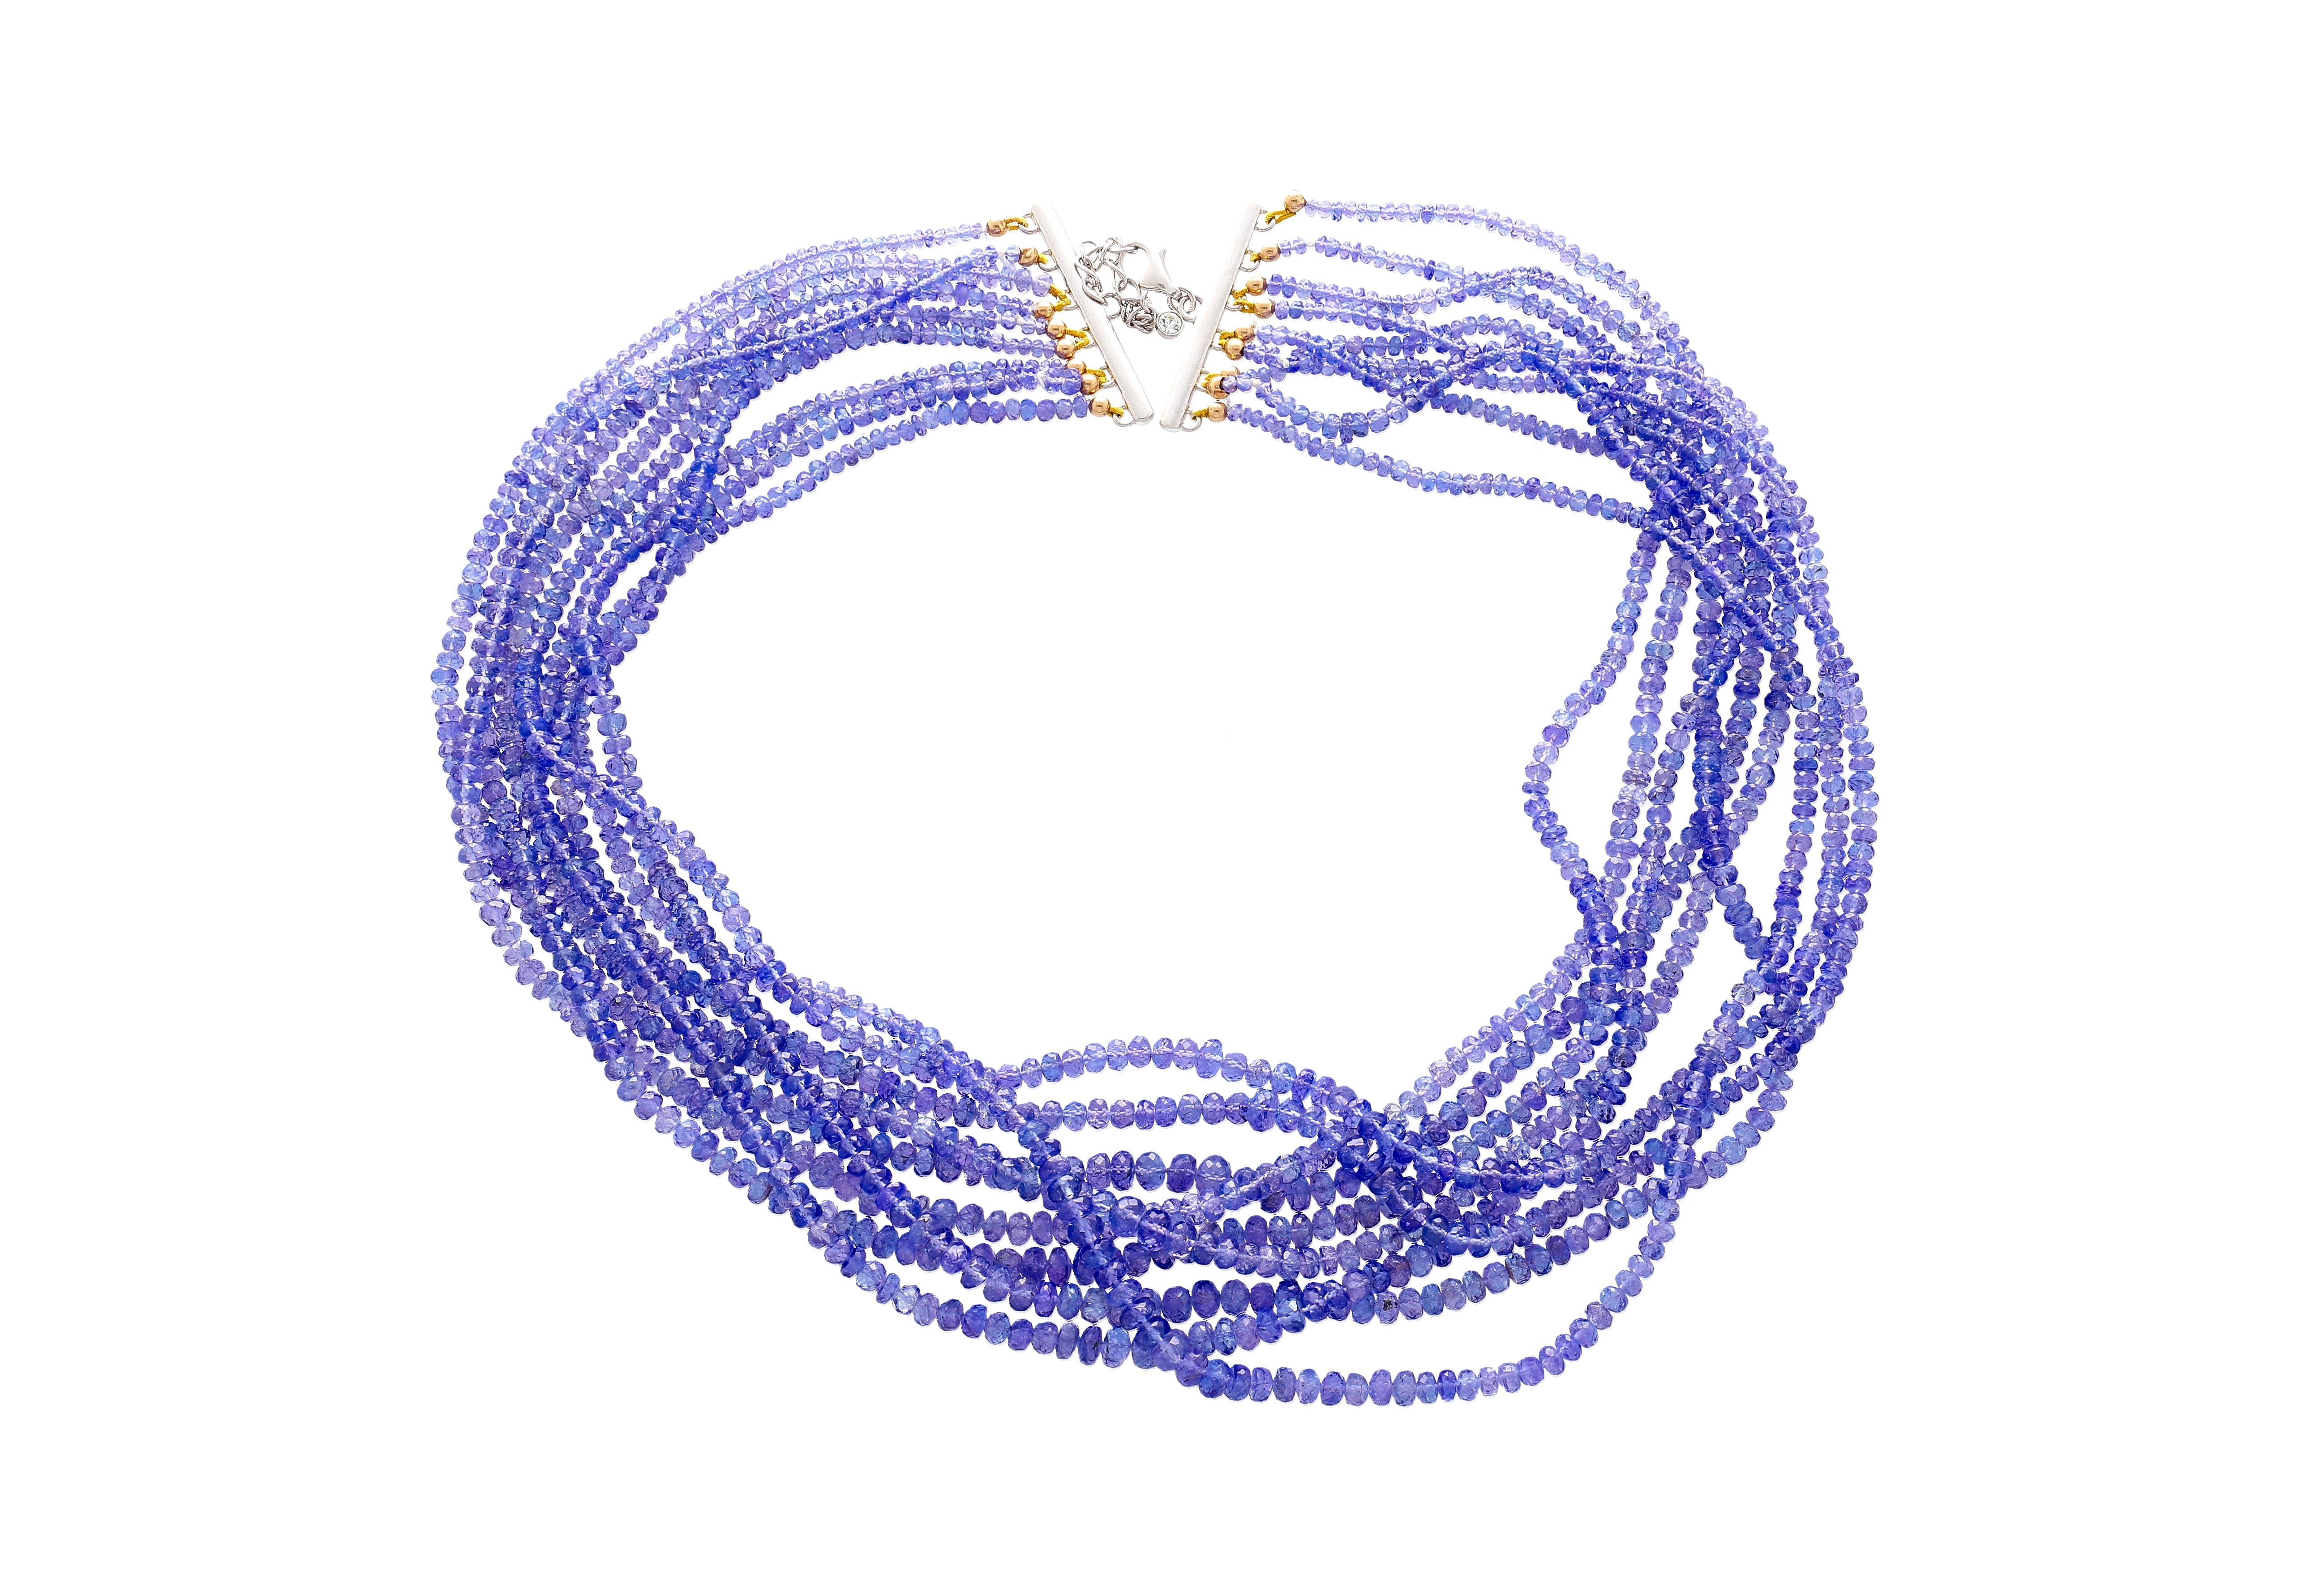 Multi-Strand-Blue-Tanzanite-Beads-Round-Cut-Diamond-Necklace-in-18K-White-Gold-Necklace.jpg